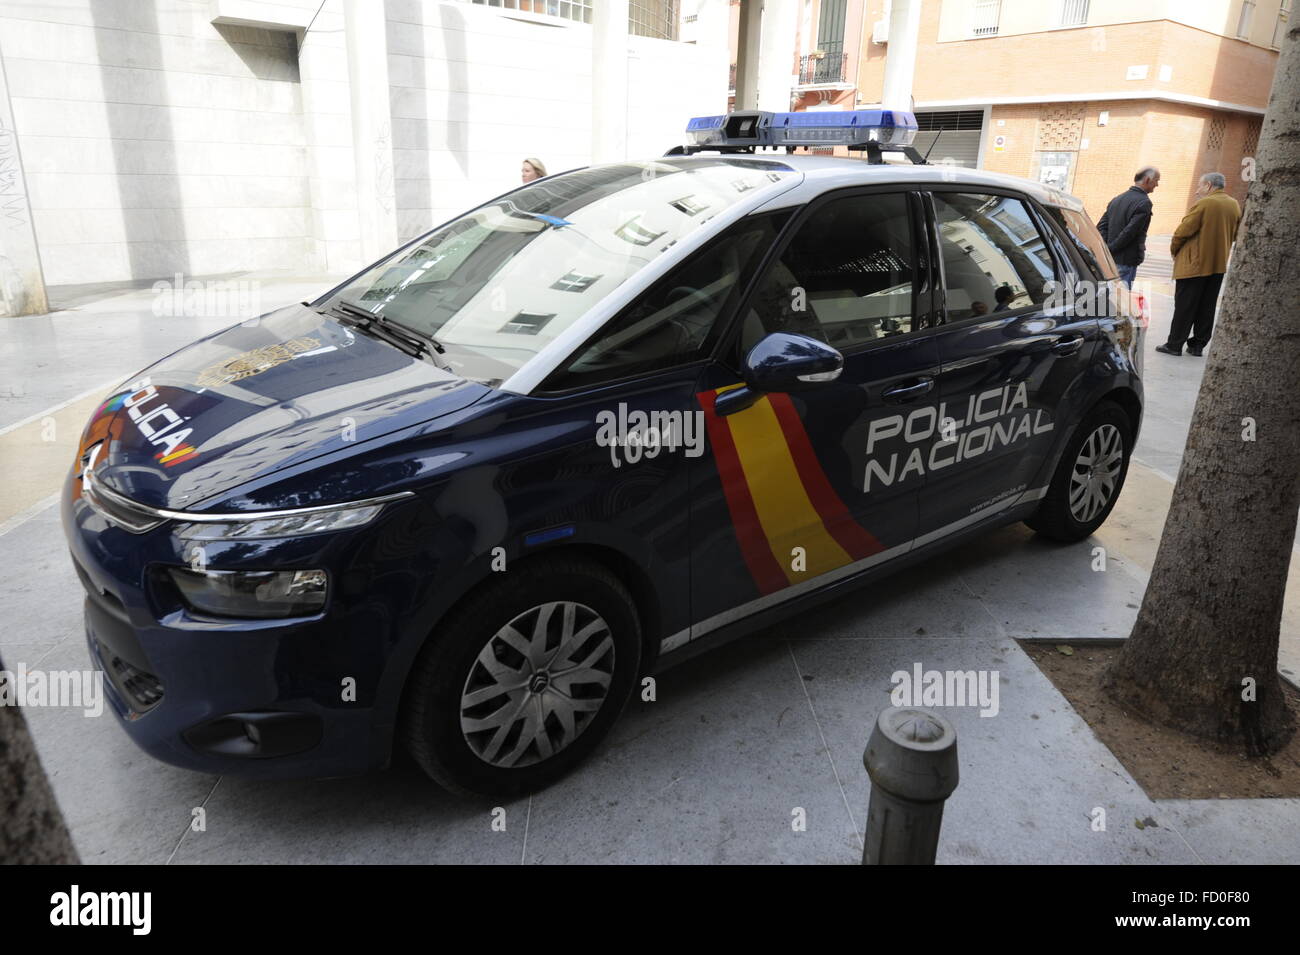 Spanish police car in malaga Spain Stock Photo: 94054352 - Alamy